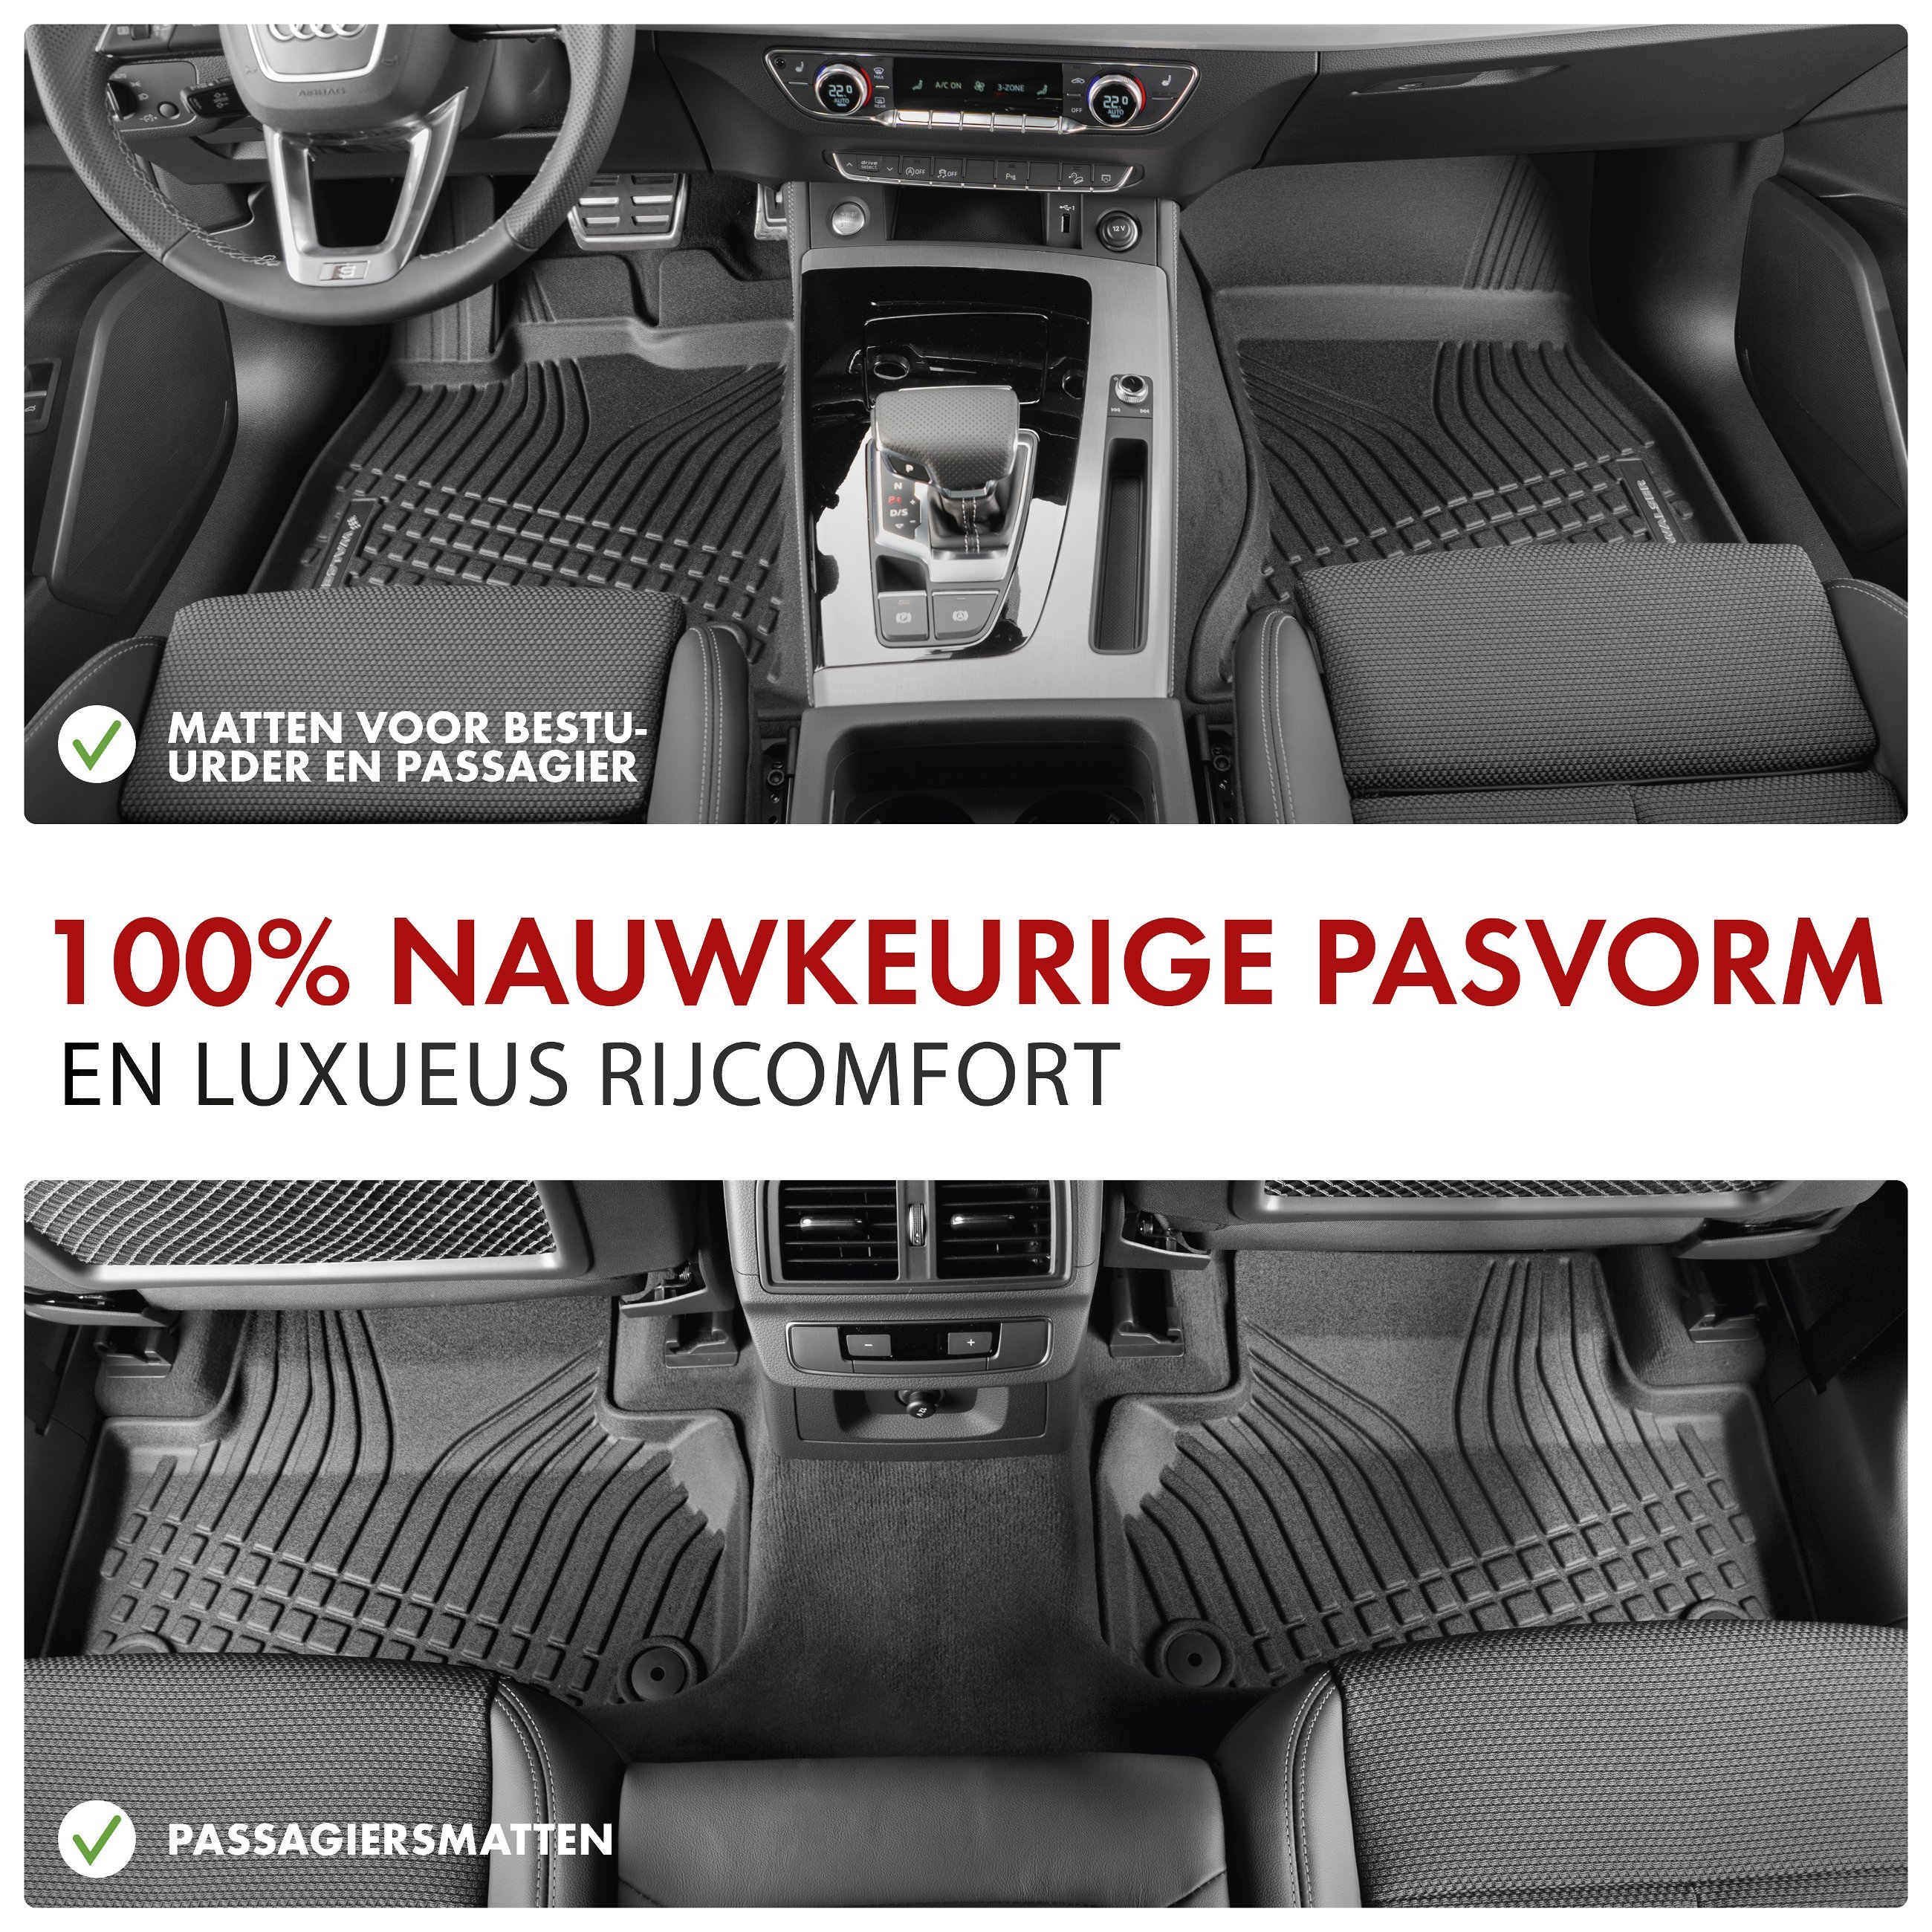 Premium rubberen matten Roadmaster voor Seat Leon (5F1) 2012-2021, Leon ST (5F8) 2012-2020, VW Golf VII 2012-2021, Golf VII Variant 2013-Vandaag, T-Roc 2017-Vandaag